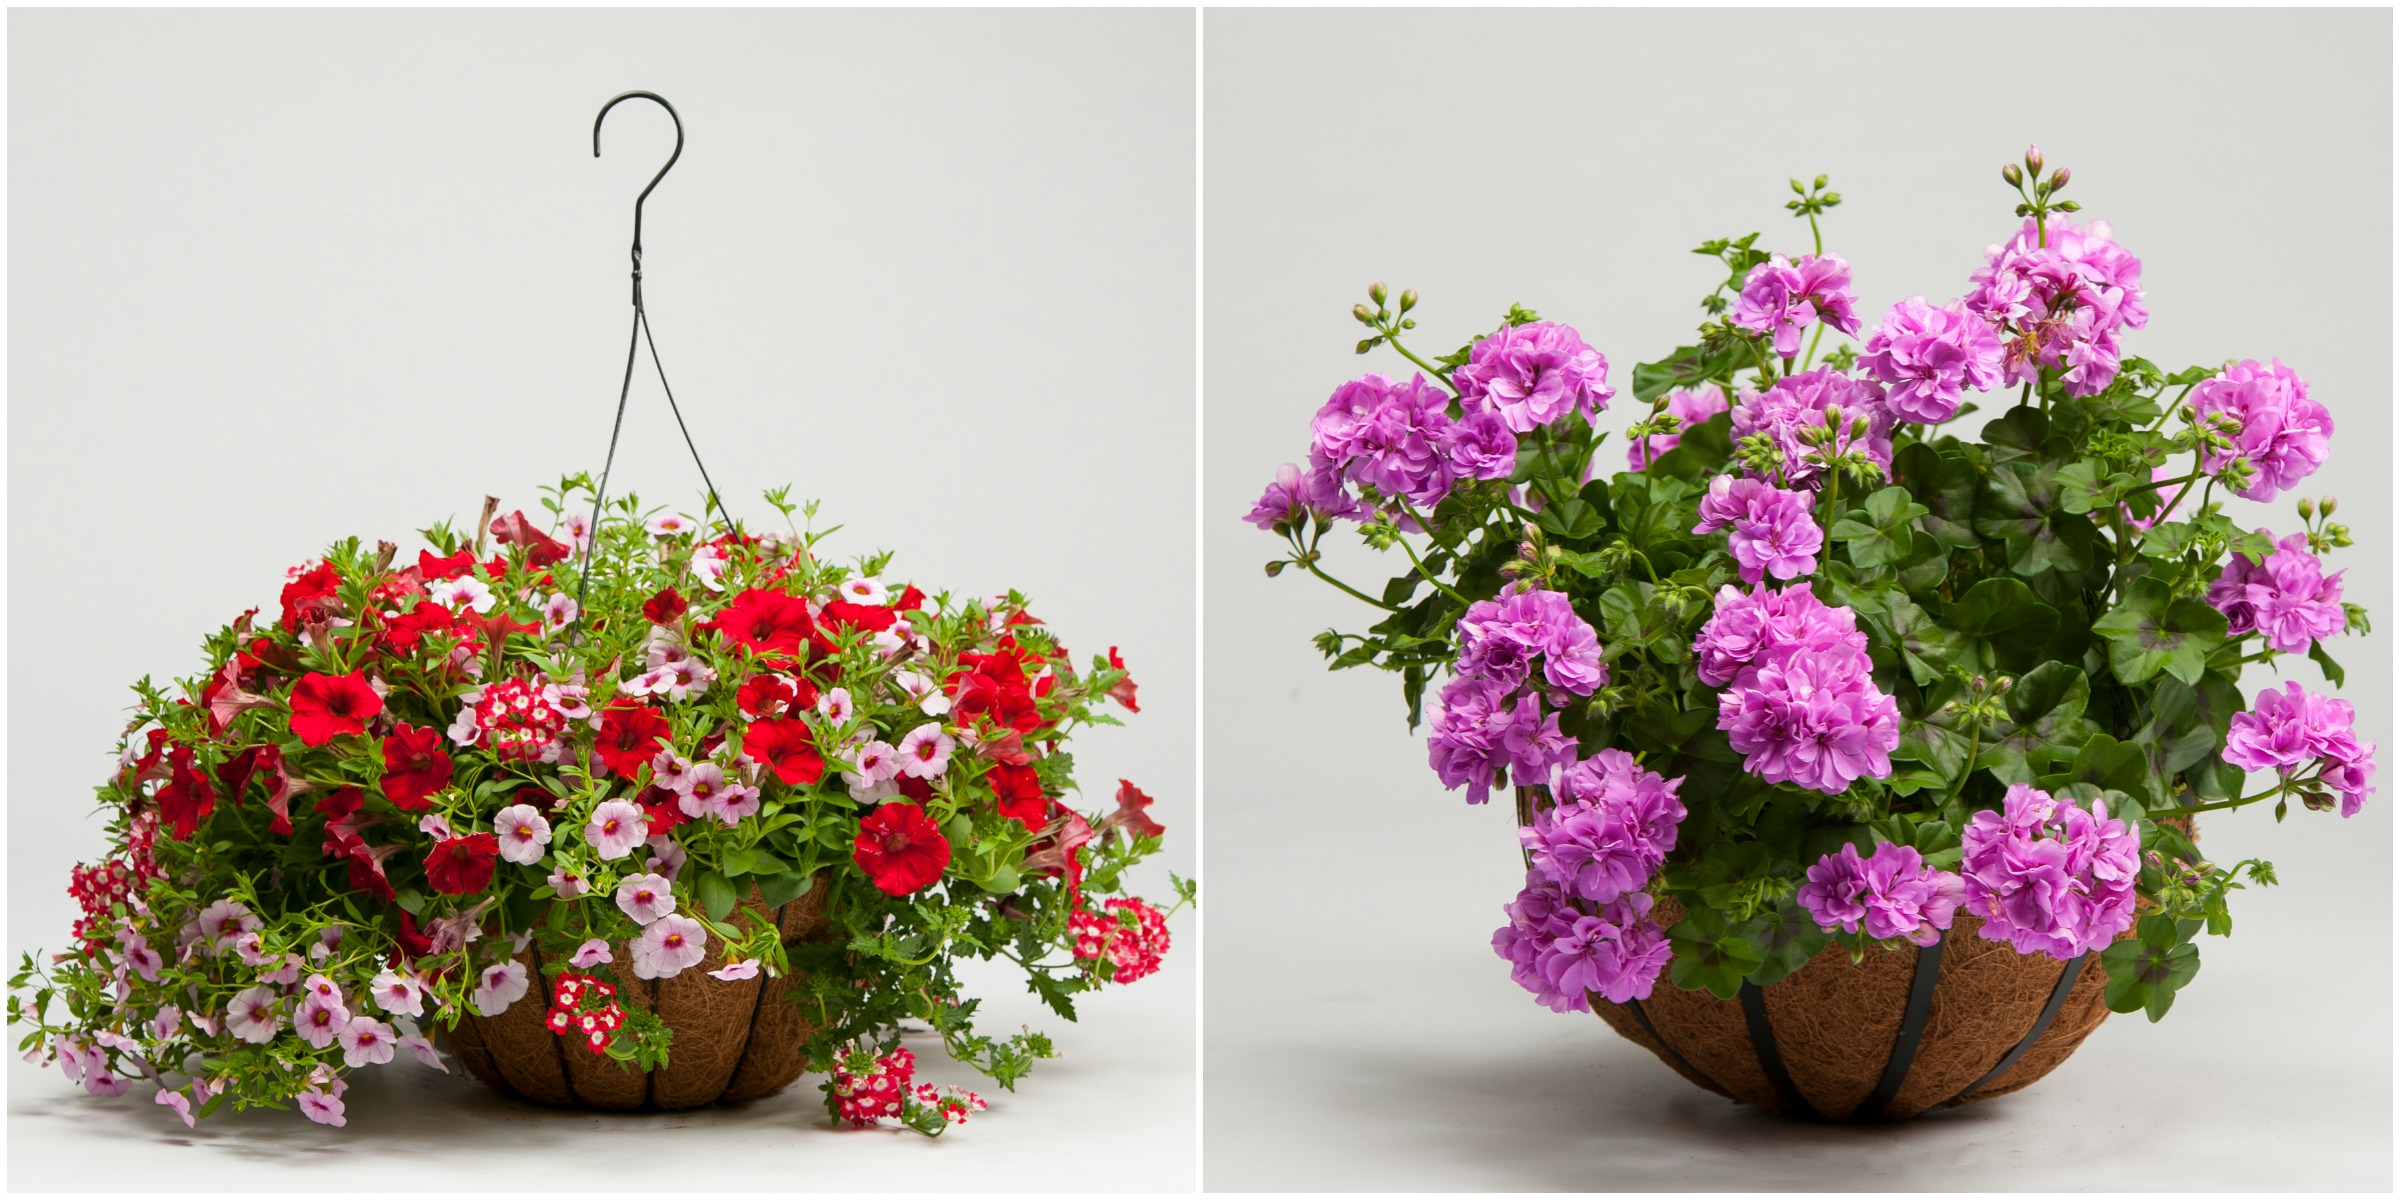 (Left) Mixed Annual Hanging Basket - $65; (Right) Ivy Geranium Basket - $55